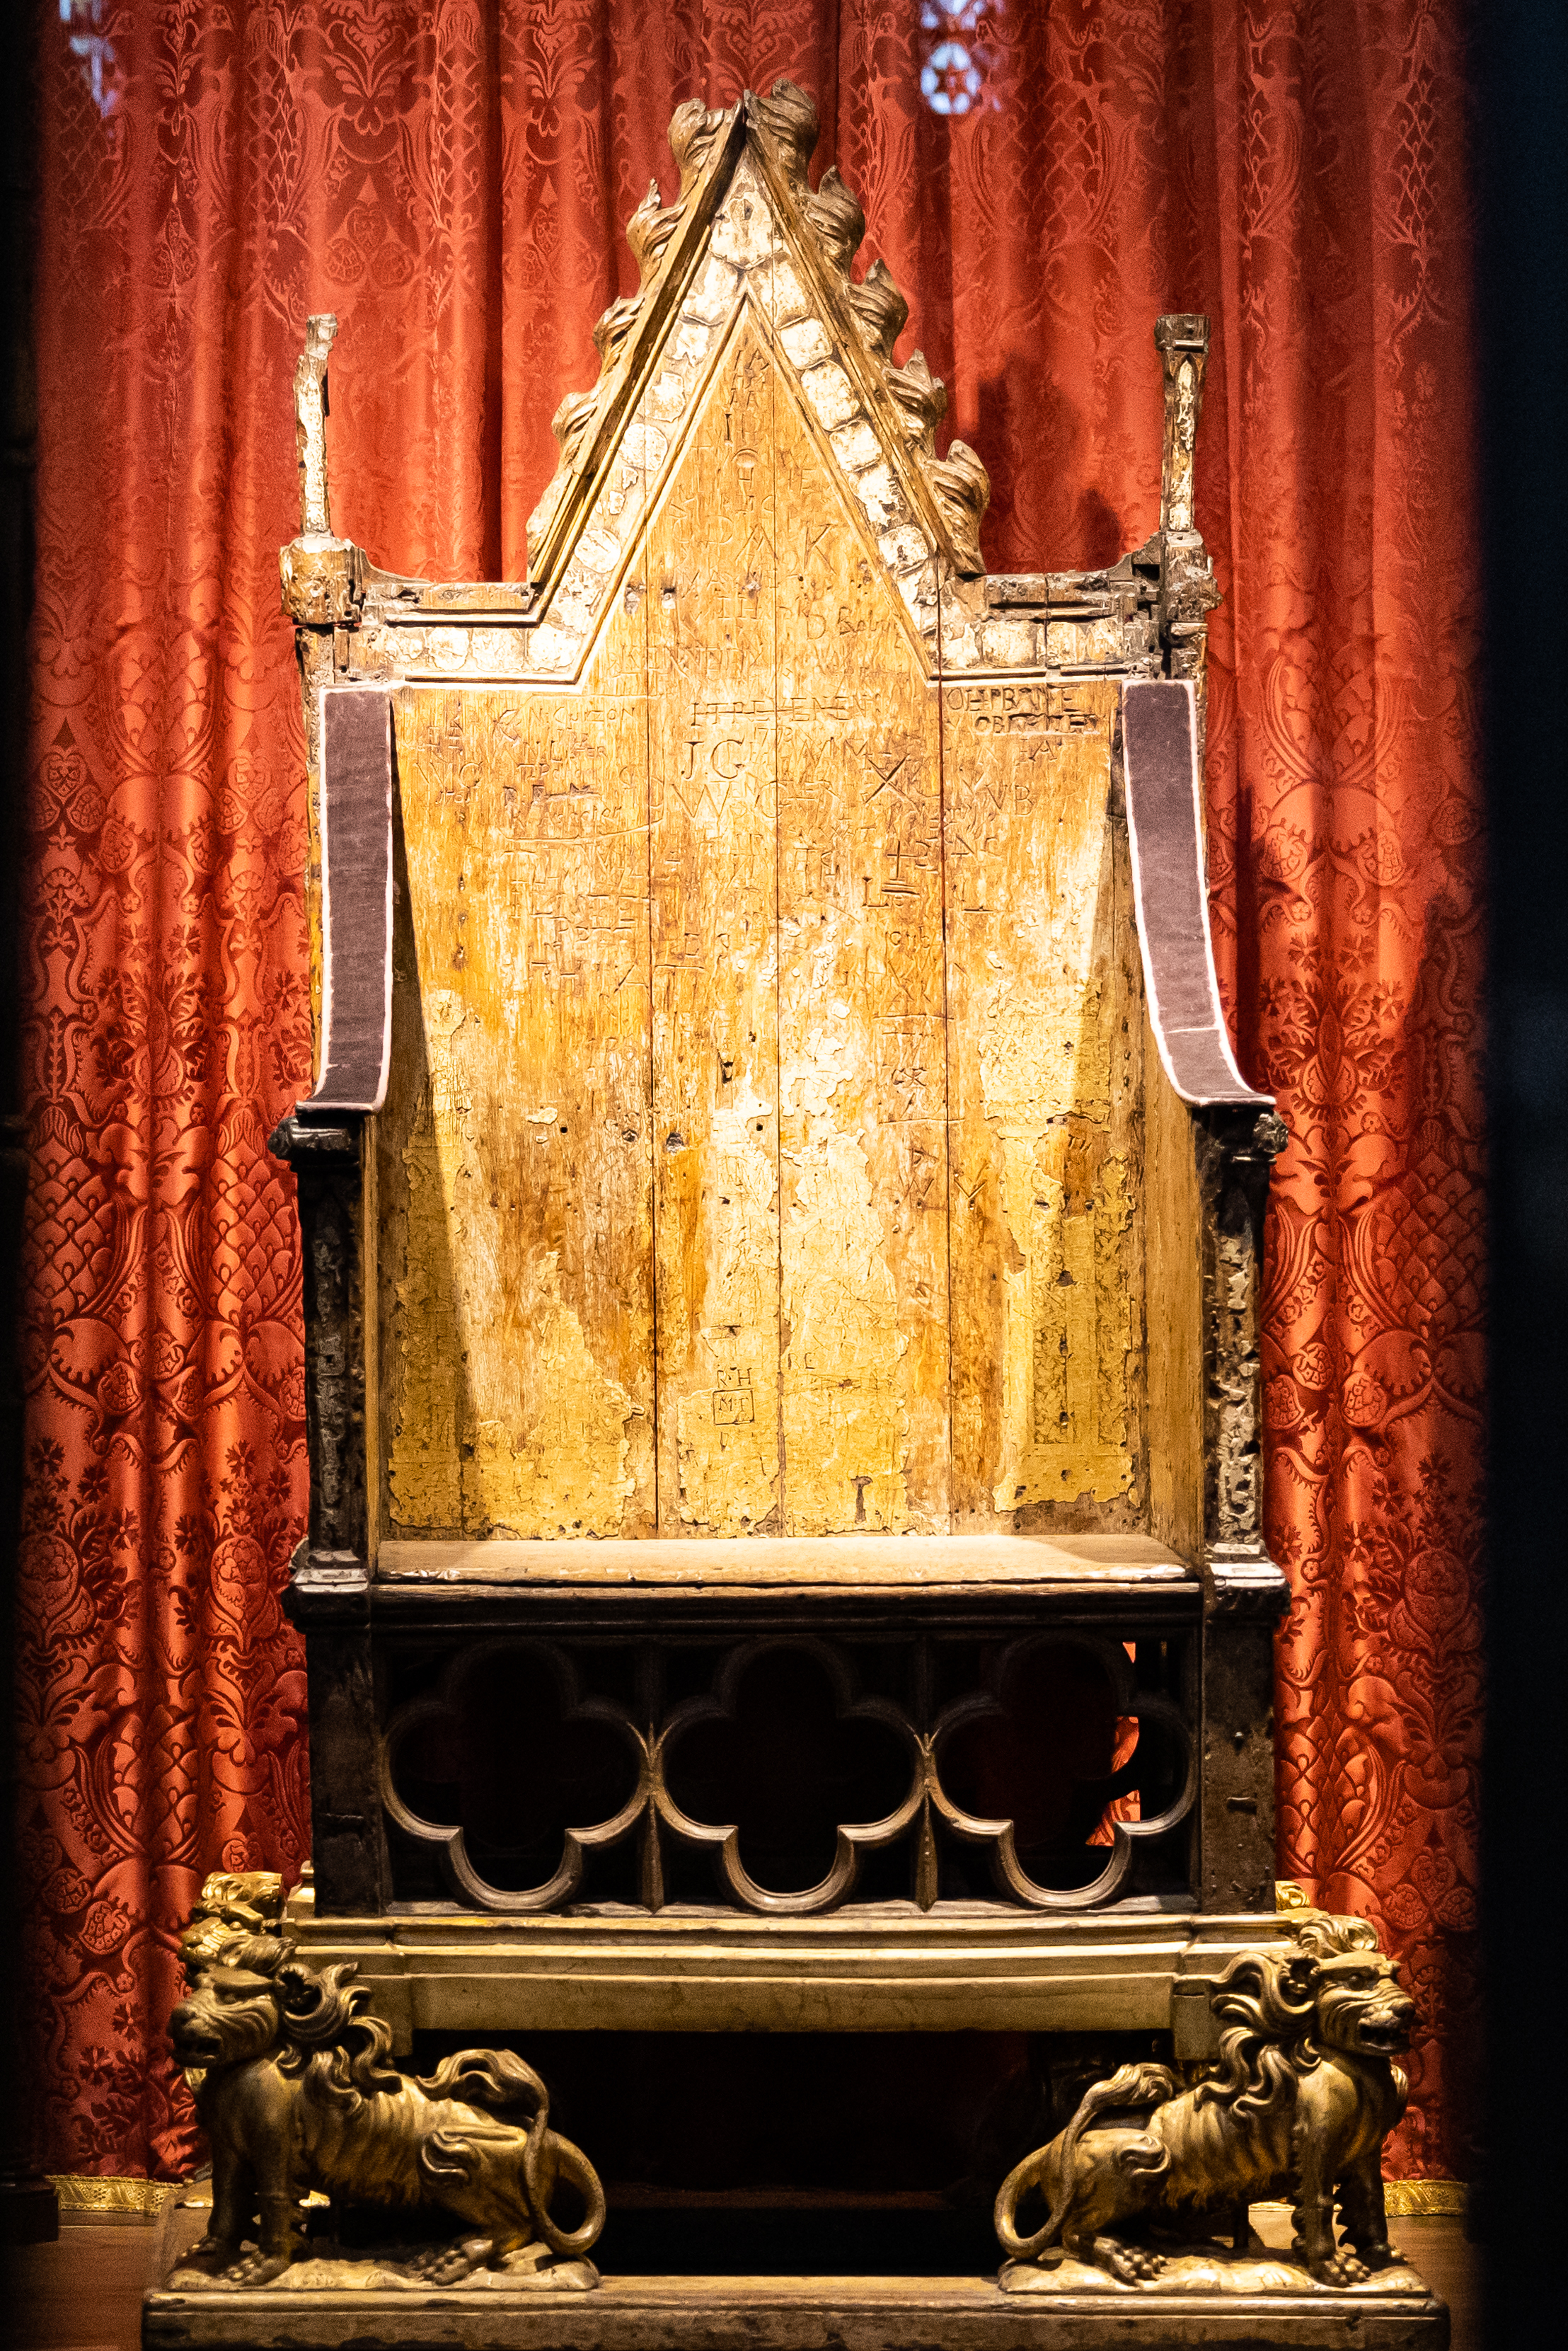 Coronation Chair - Wikipedia